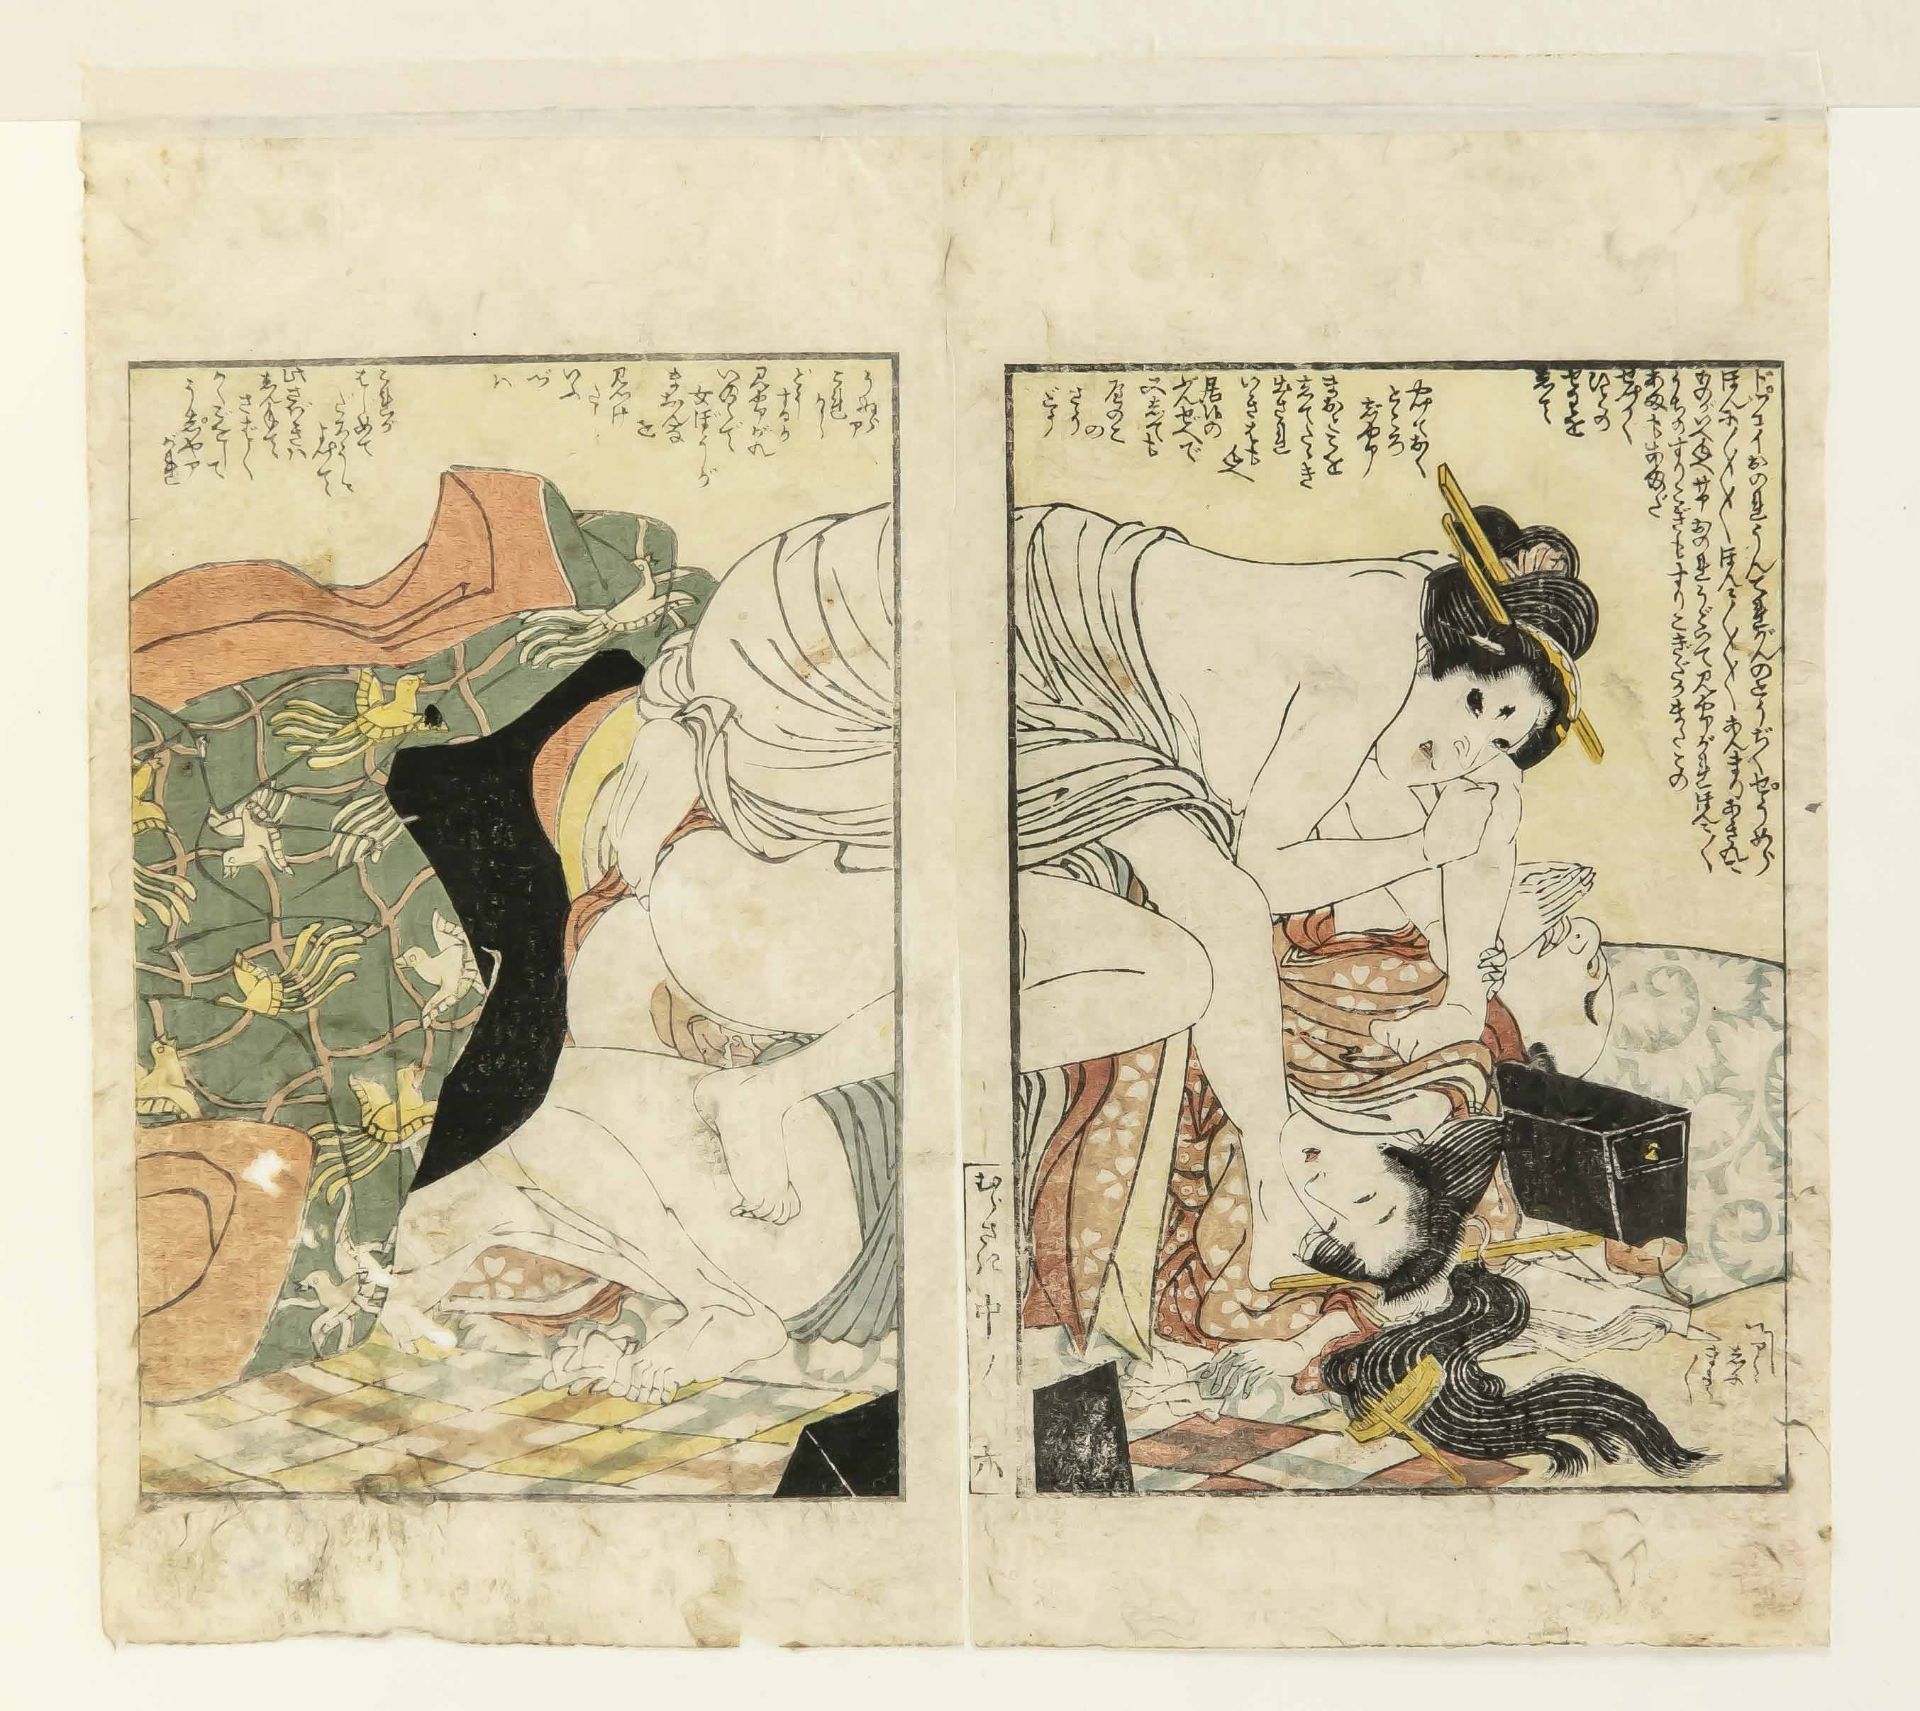 3 Shunga Doppelseiten, Japan, 19. Jh. (late Edo). F - Bild 2 aus 3